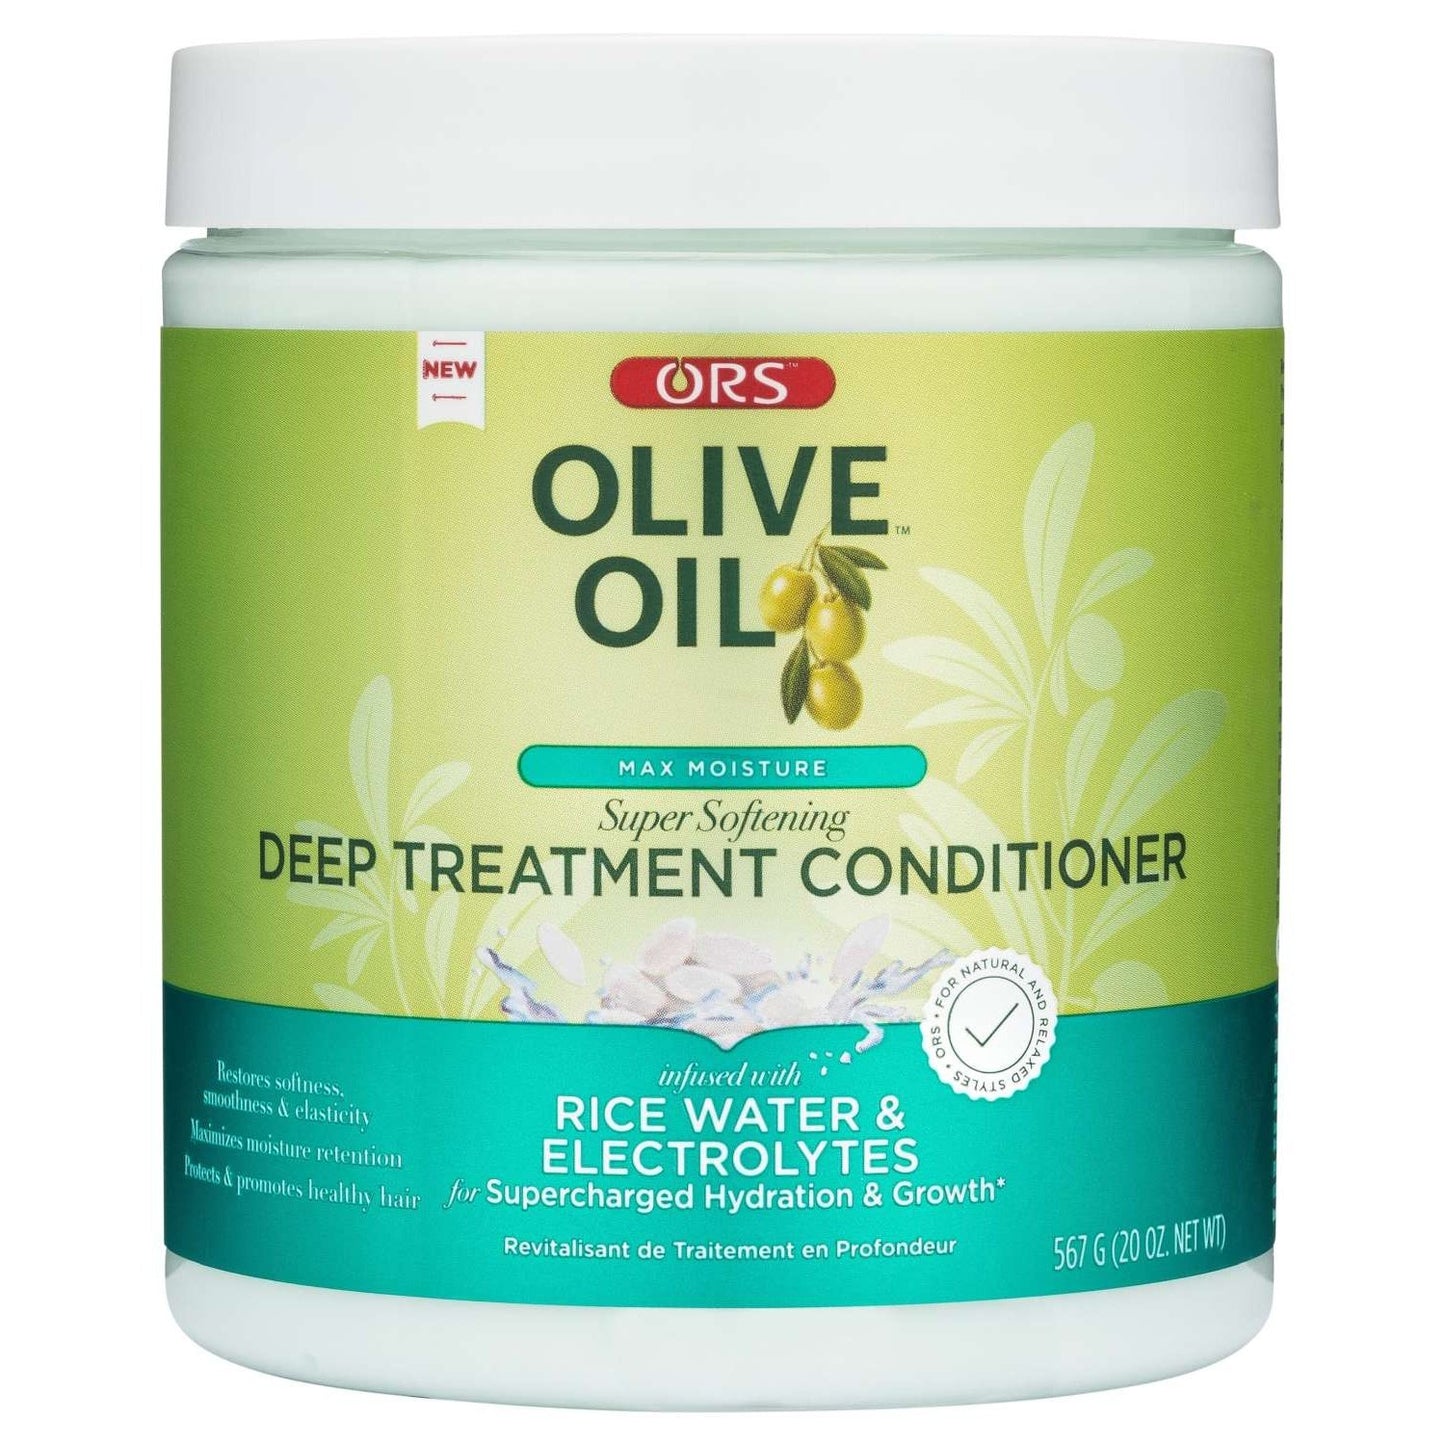 Acondicionador de tratamiento profundo Ors Olive Oil Max Moisture